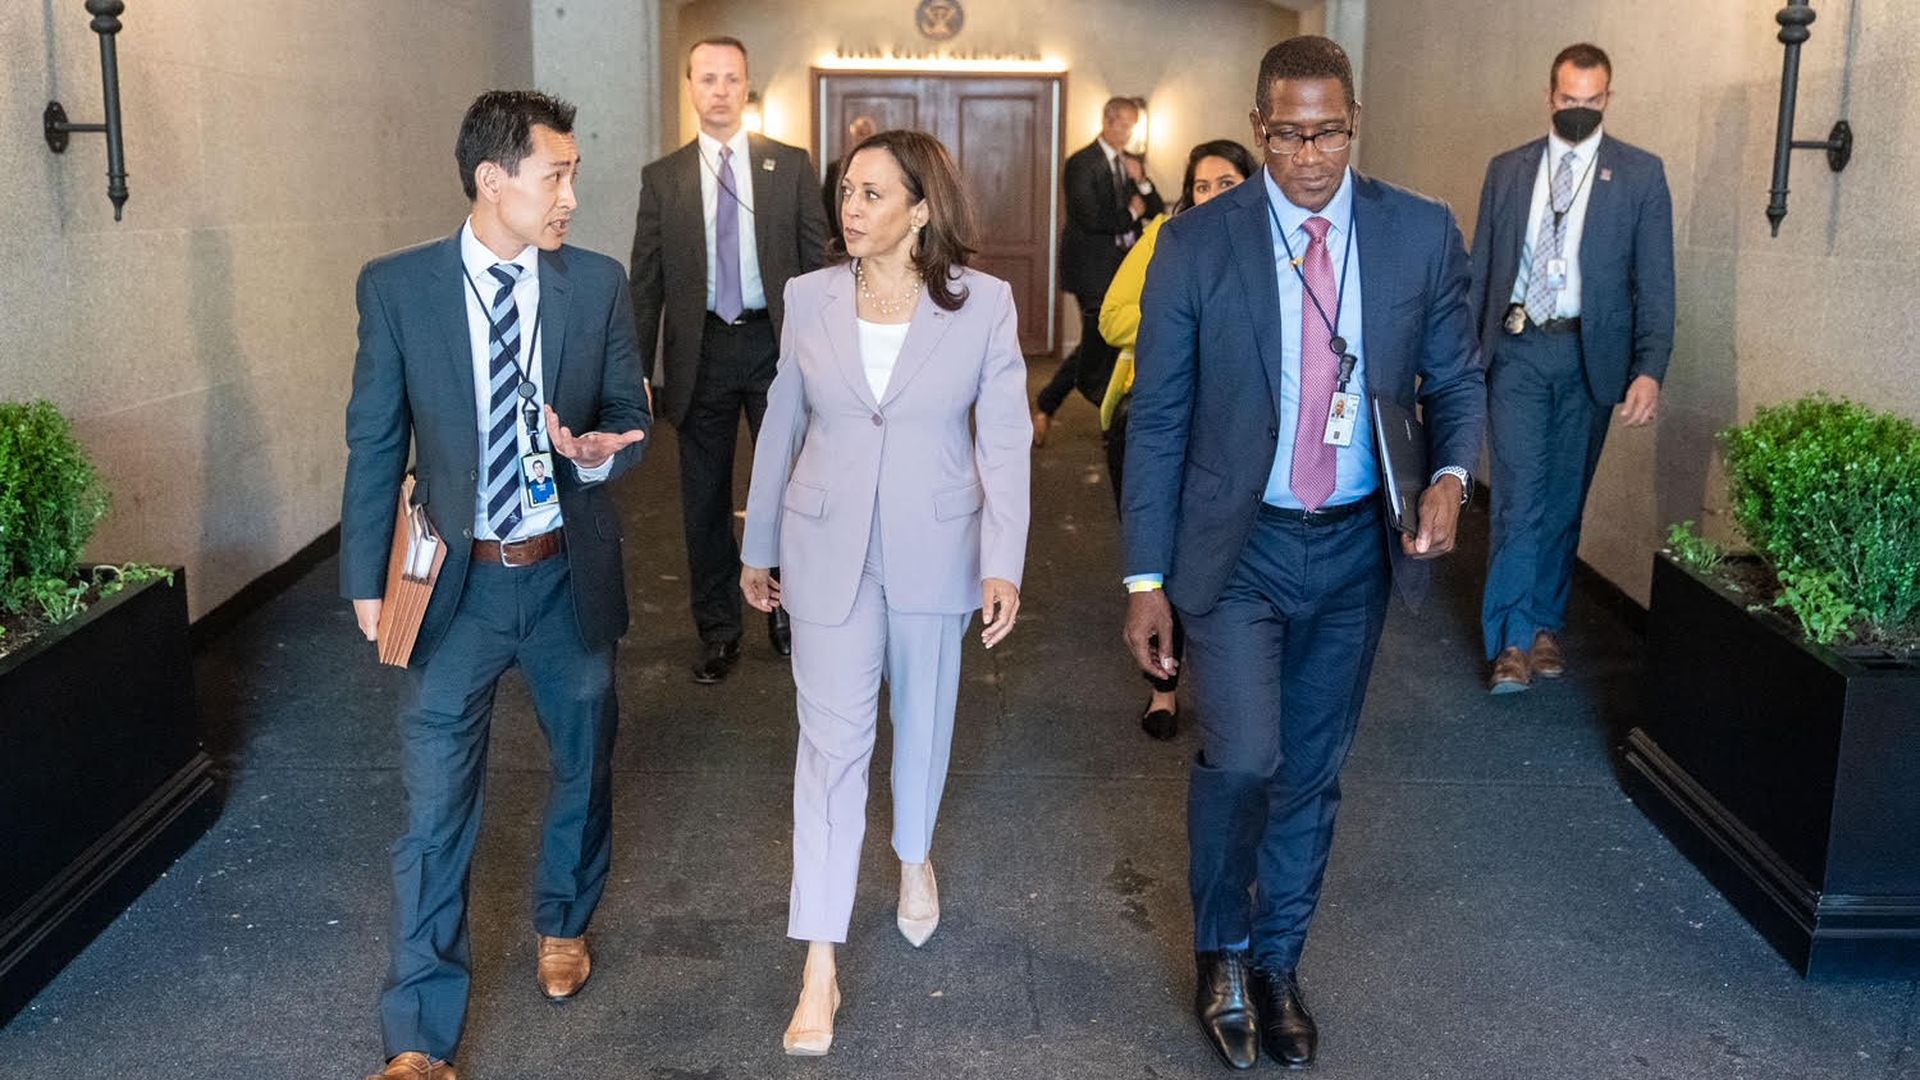 Josh Hsu talks to Vice President Kamala Harris while walking. 